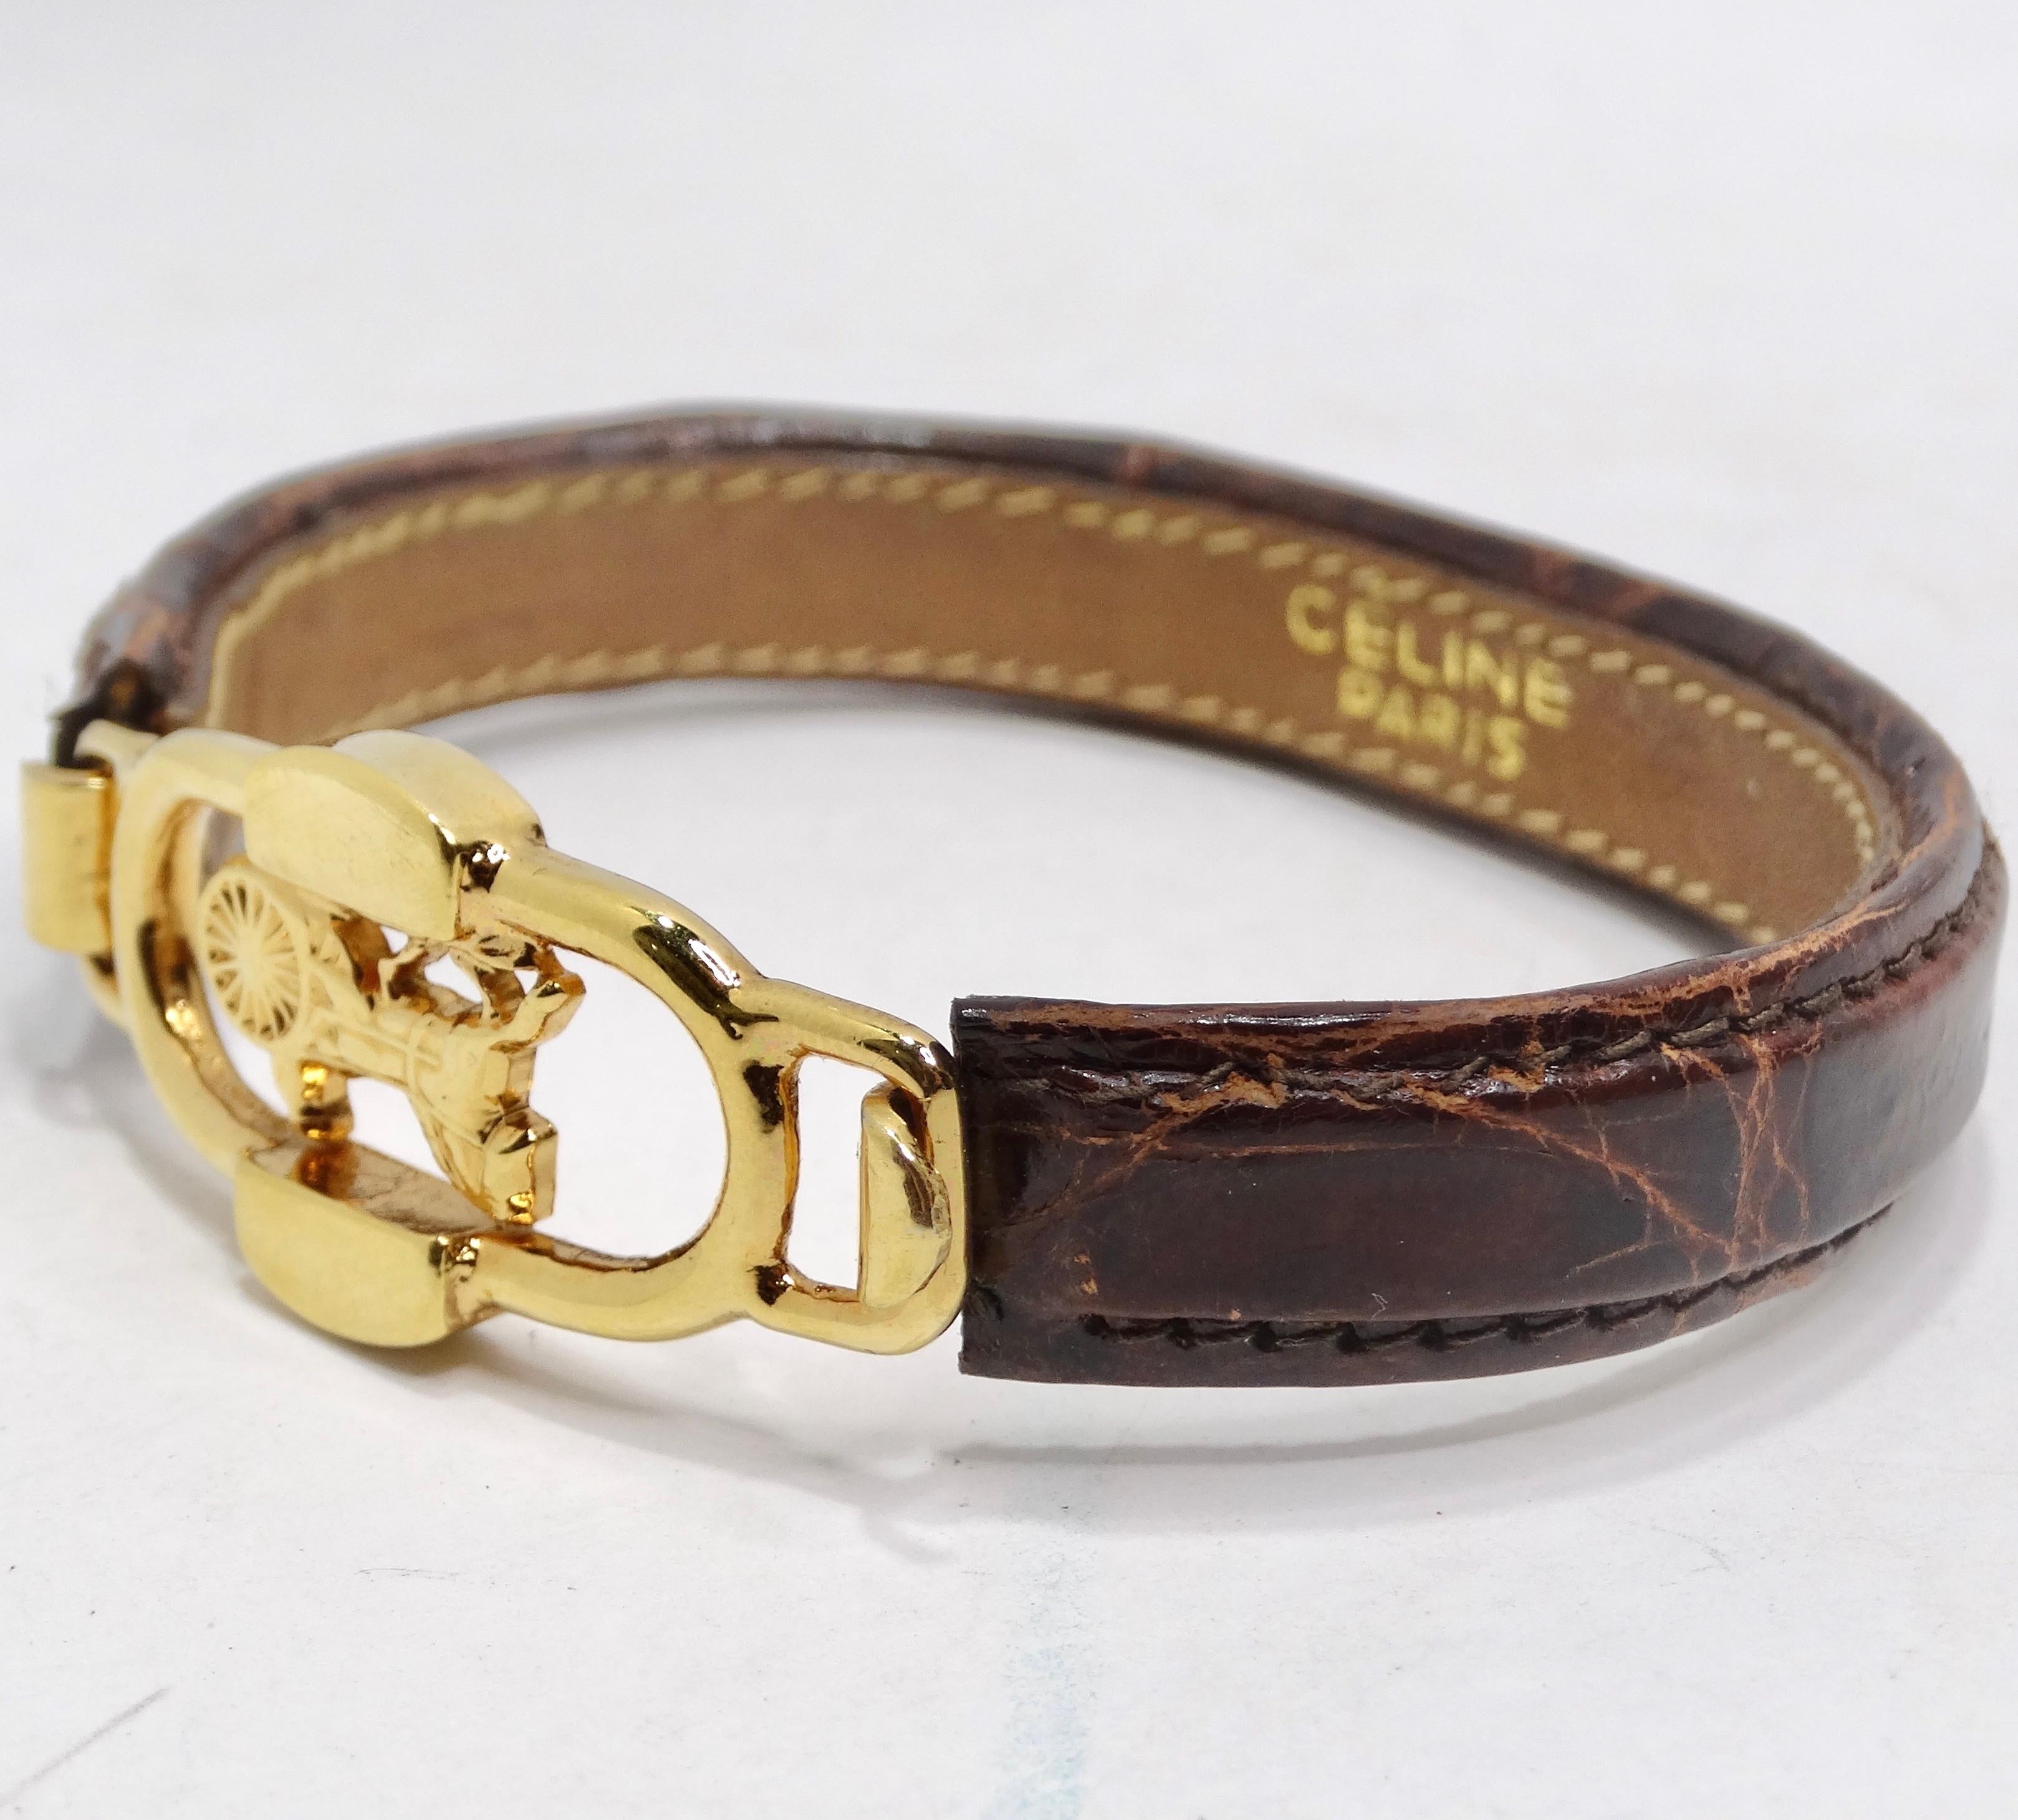 Celine 1990s Gold Tone Horse Emblem Leather Bracelet In Excellent Condition For Sale In Scottsdale, AZ